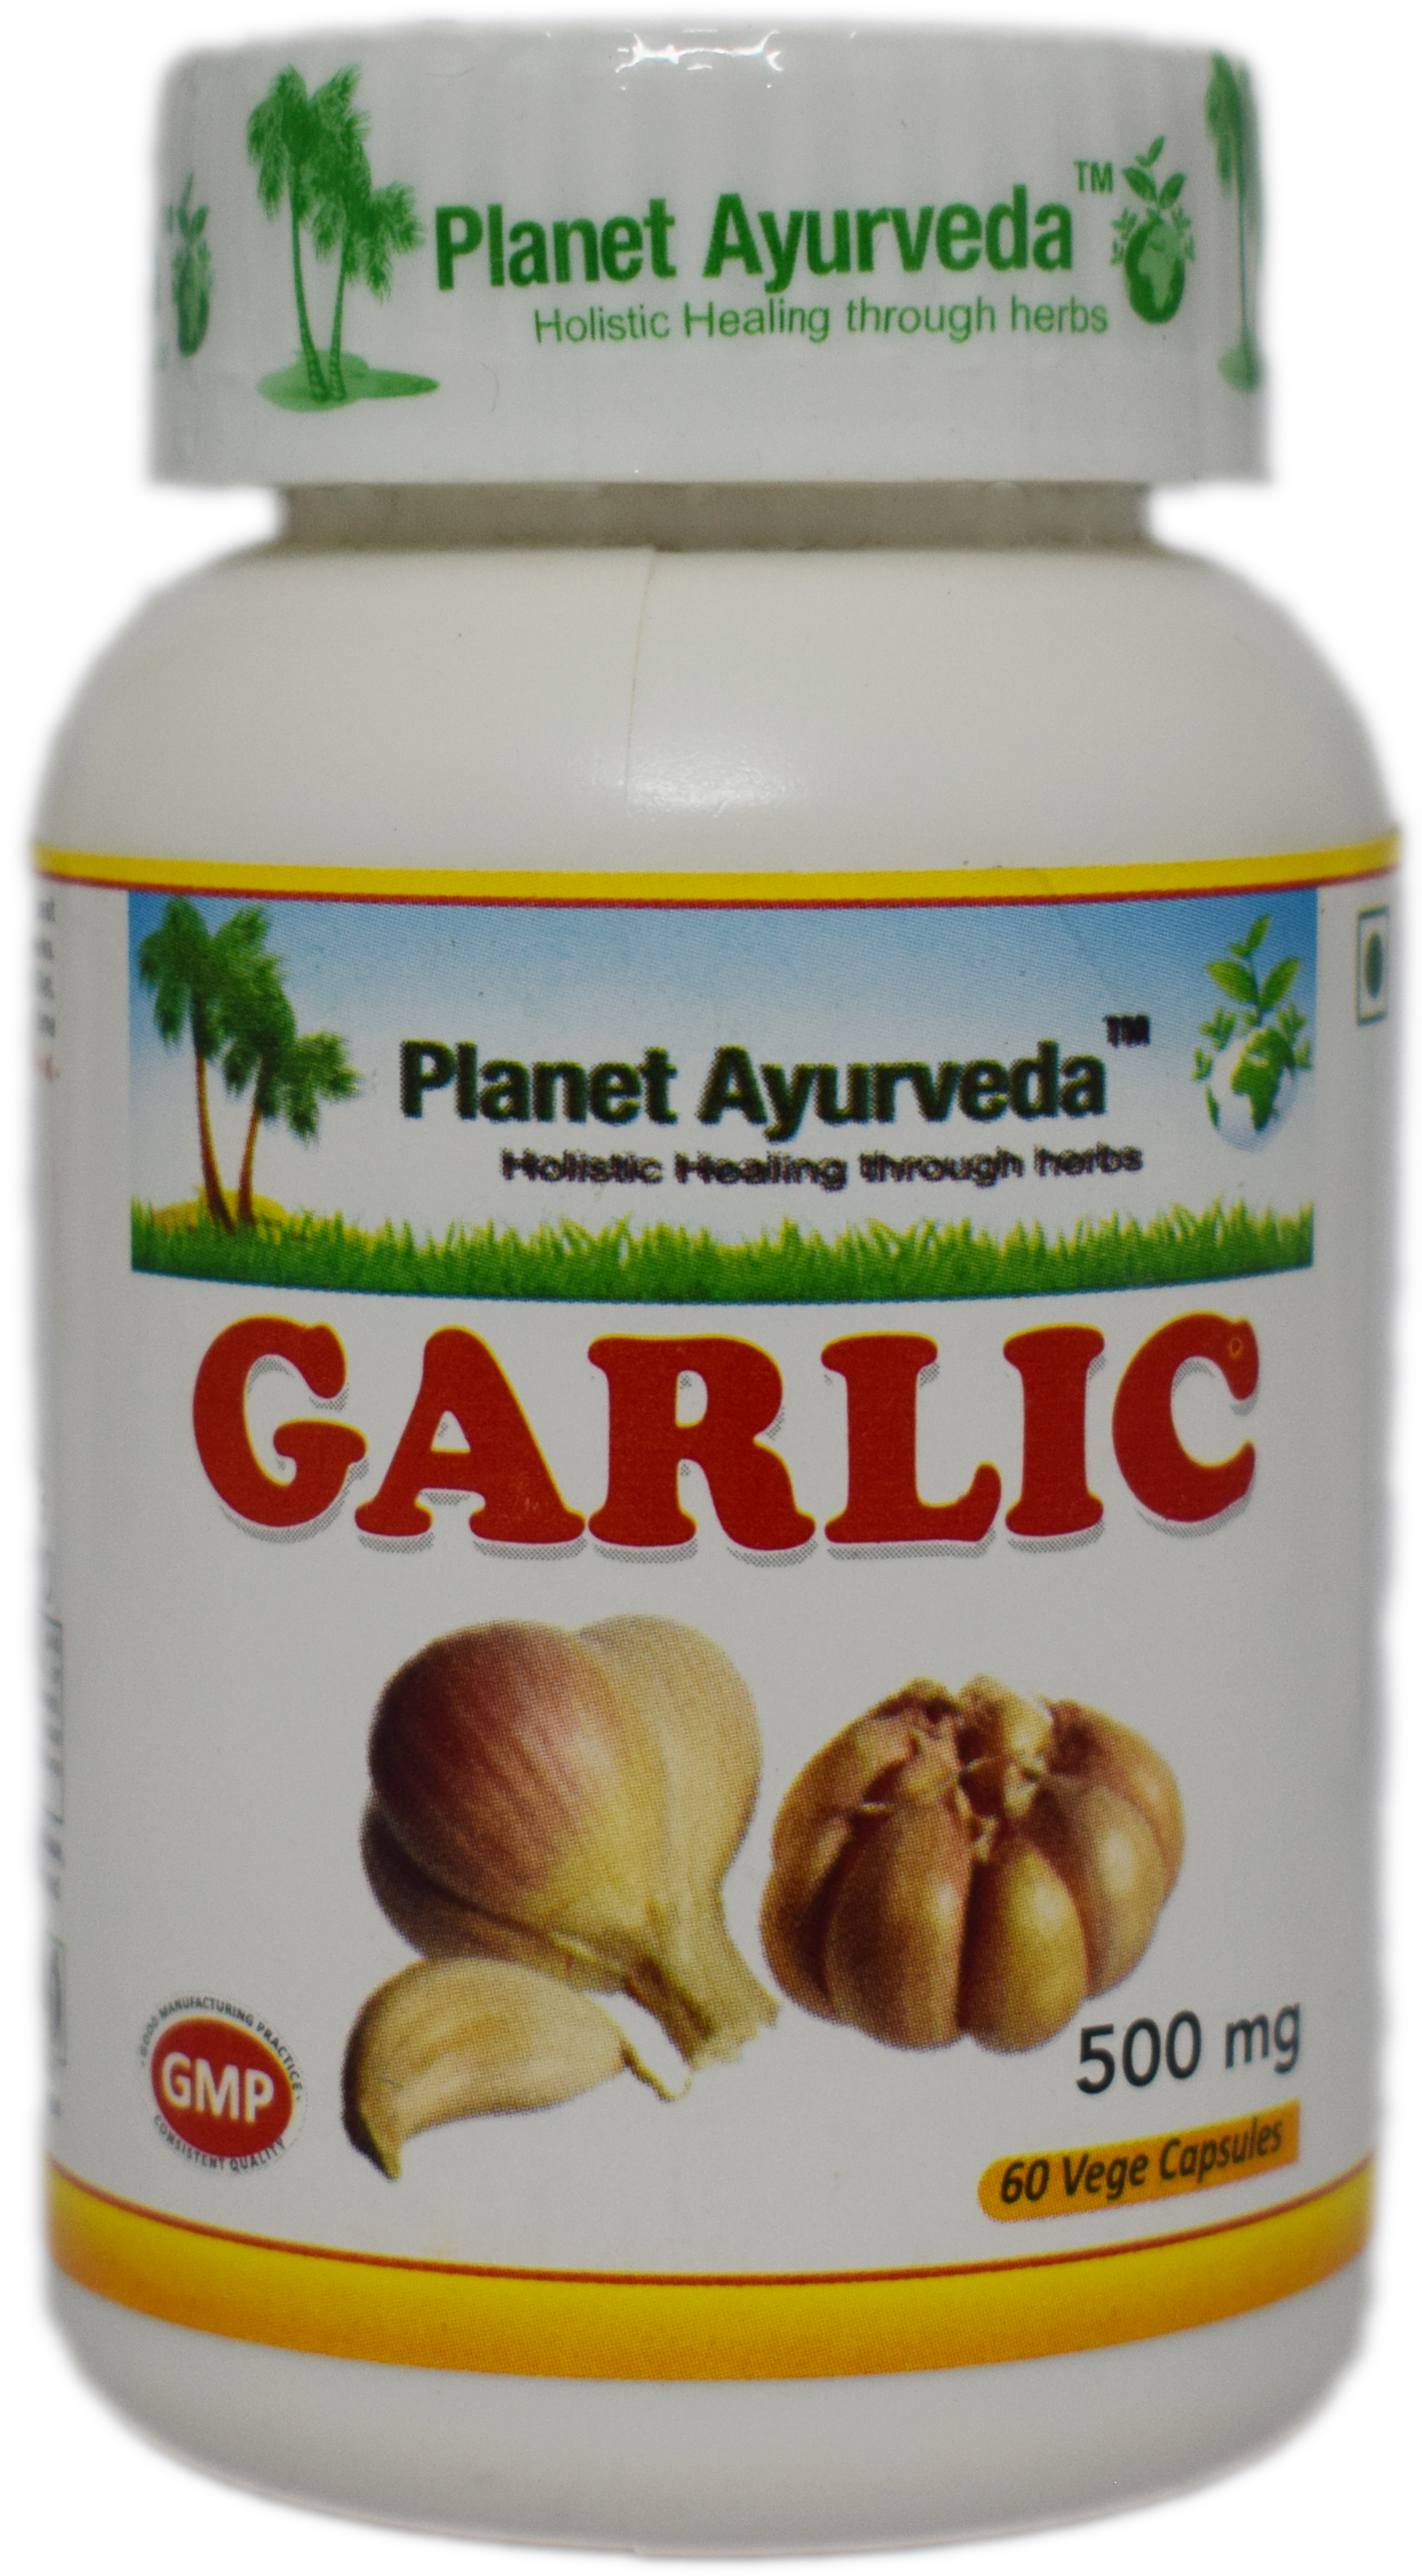 Buy Planet Ayurveda Garlic Capsules at Best Price Online